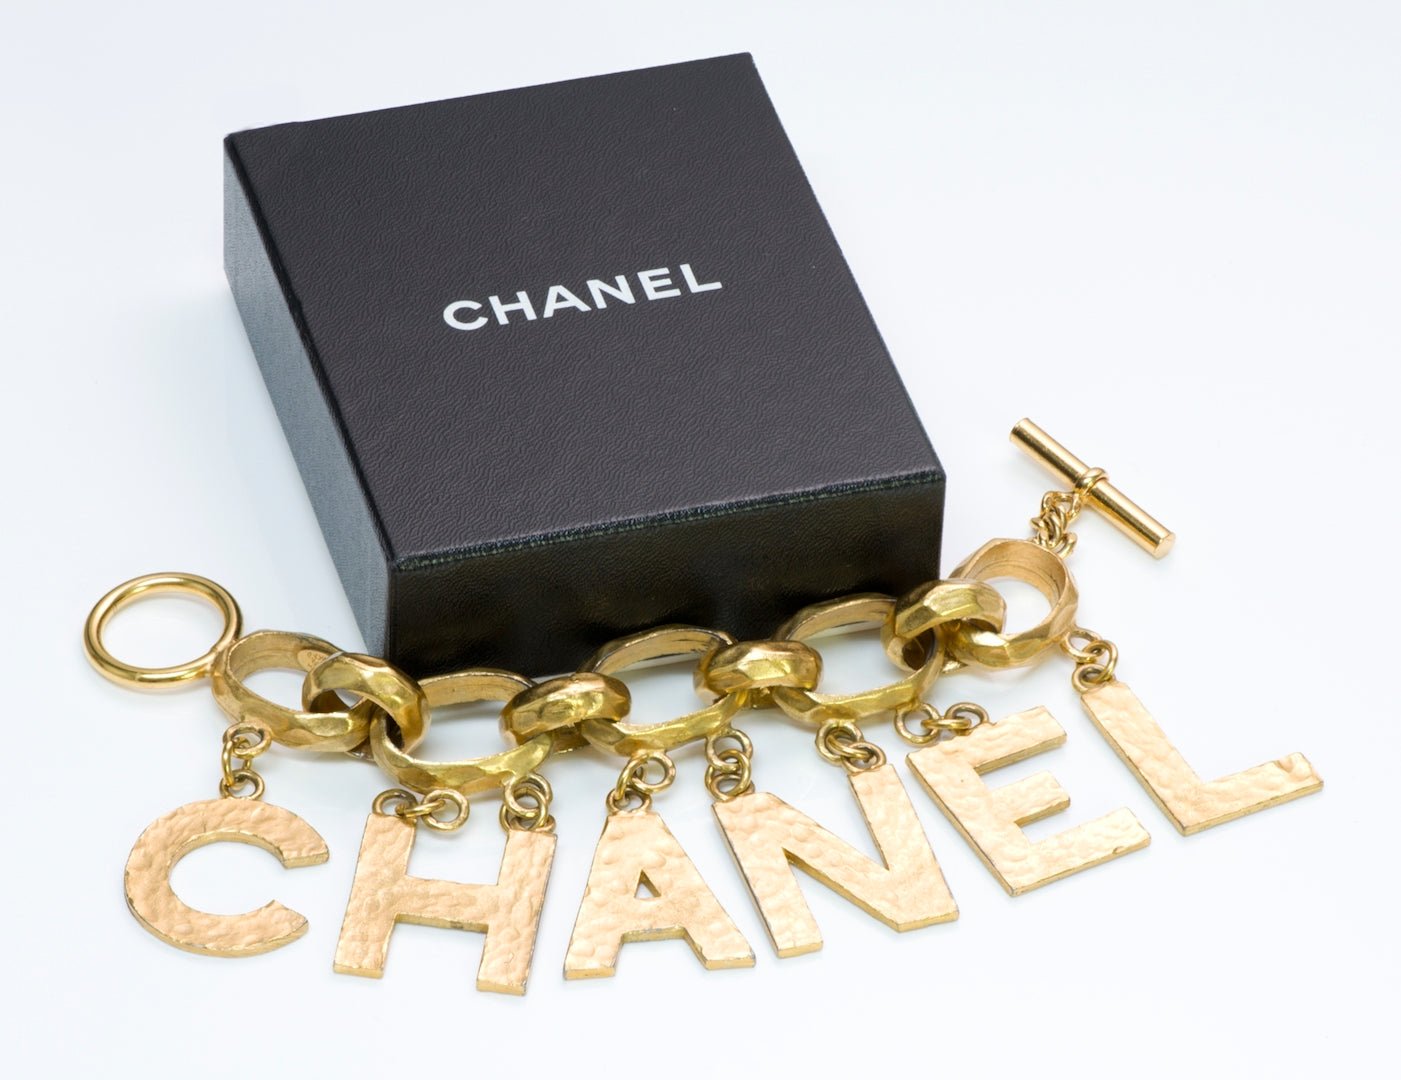 Chanel Letter Charm Bracelet